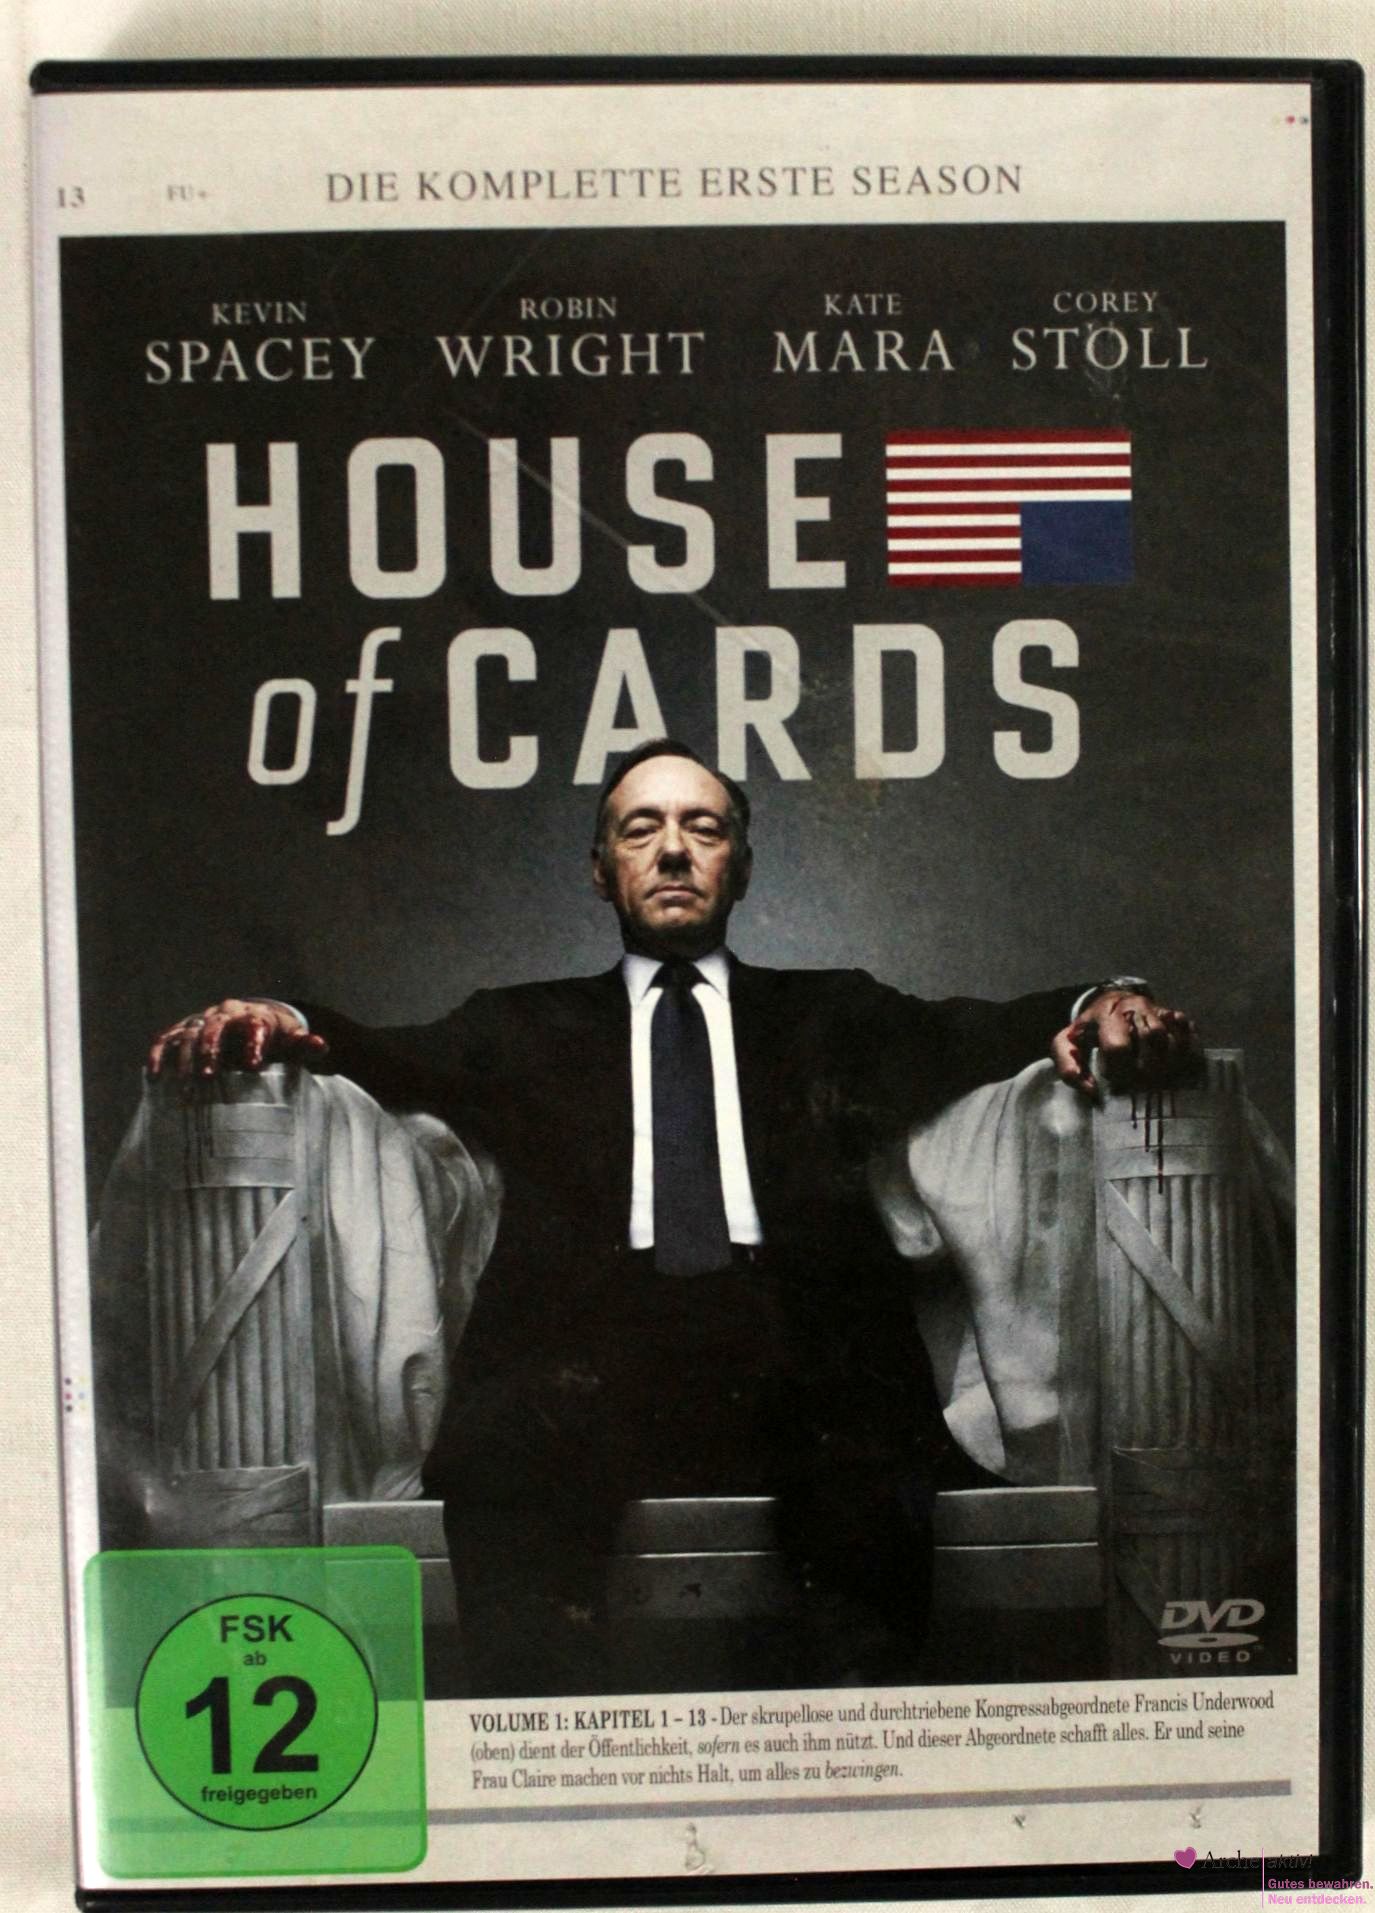 House of Cards die komplette erste Season auf DVD, gebr.